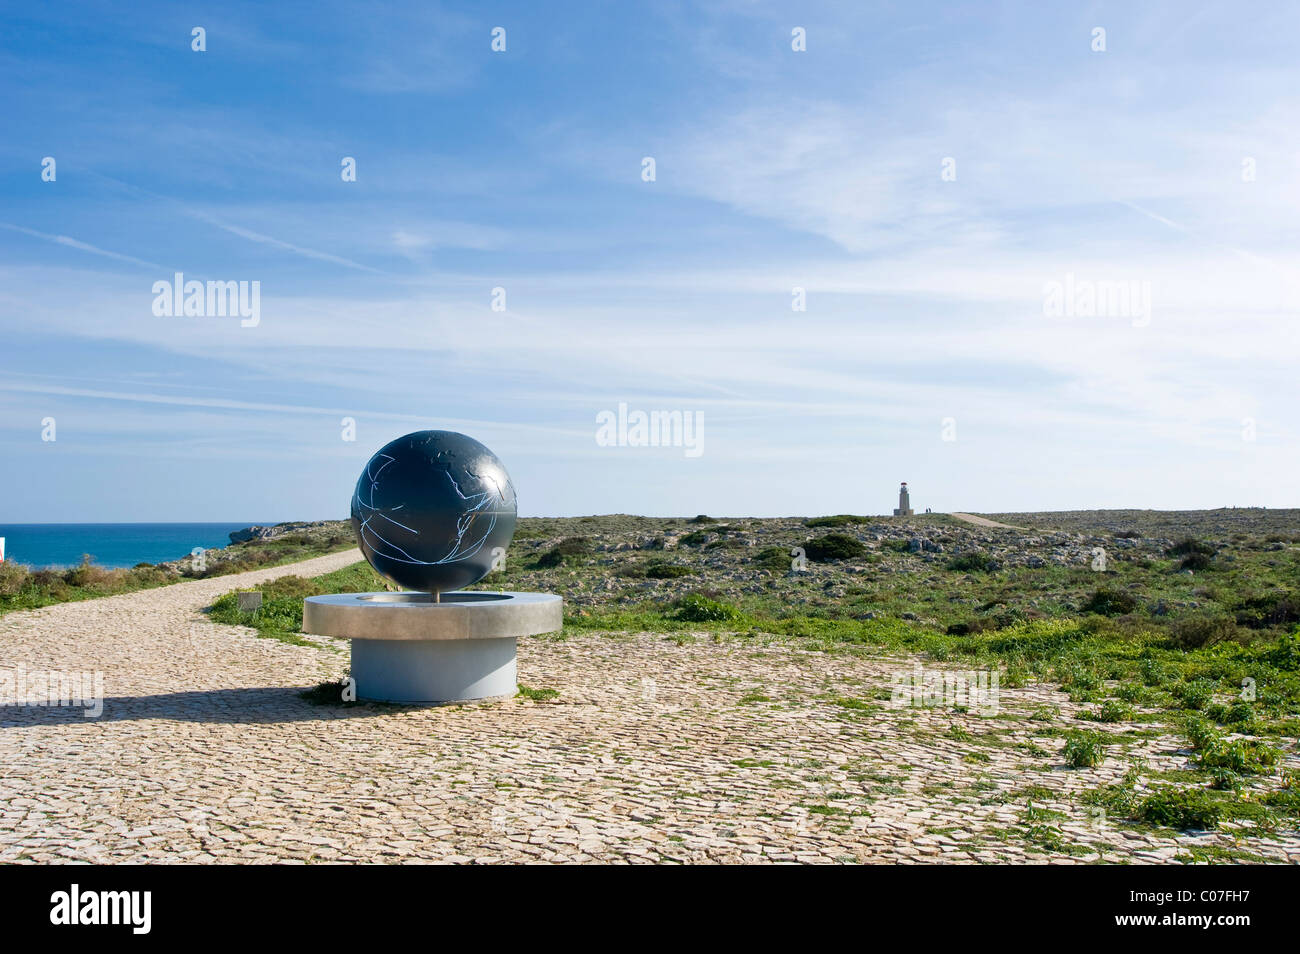 Globe in the Fortaleza de Sagres national monument, Ponta de Sagres, Sagres, Algarve, Portugal, Europe Stock Photo